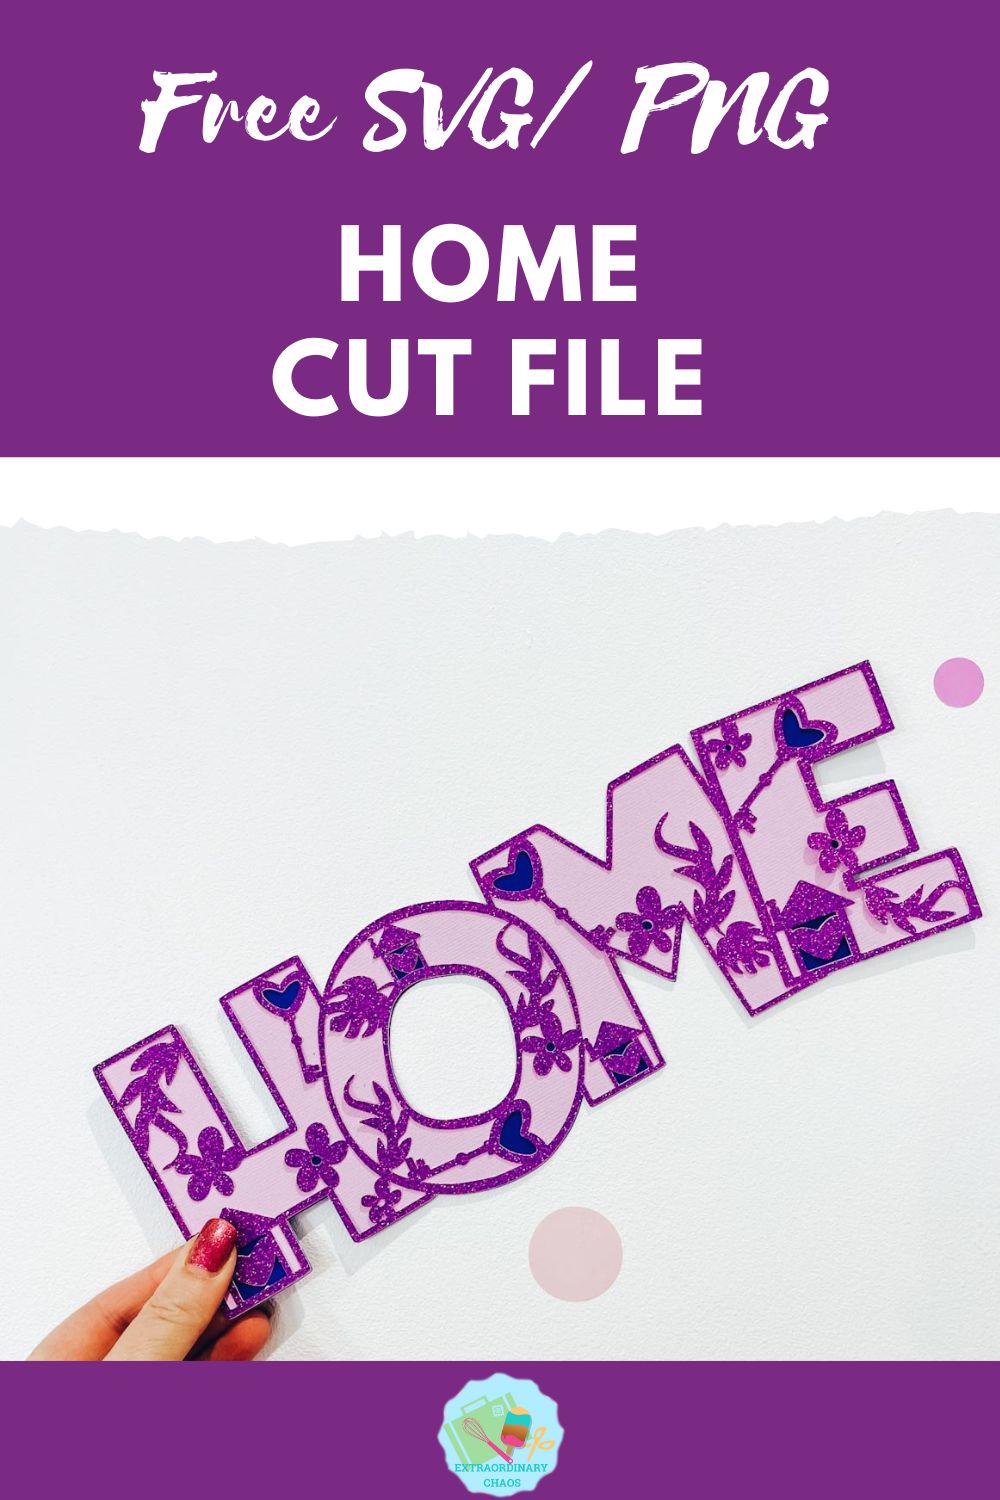 Free Home Cut file SVG, PNG for Cricut, Glowforge